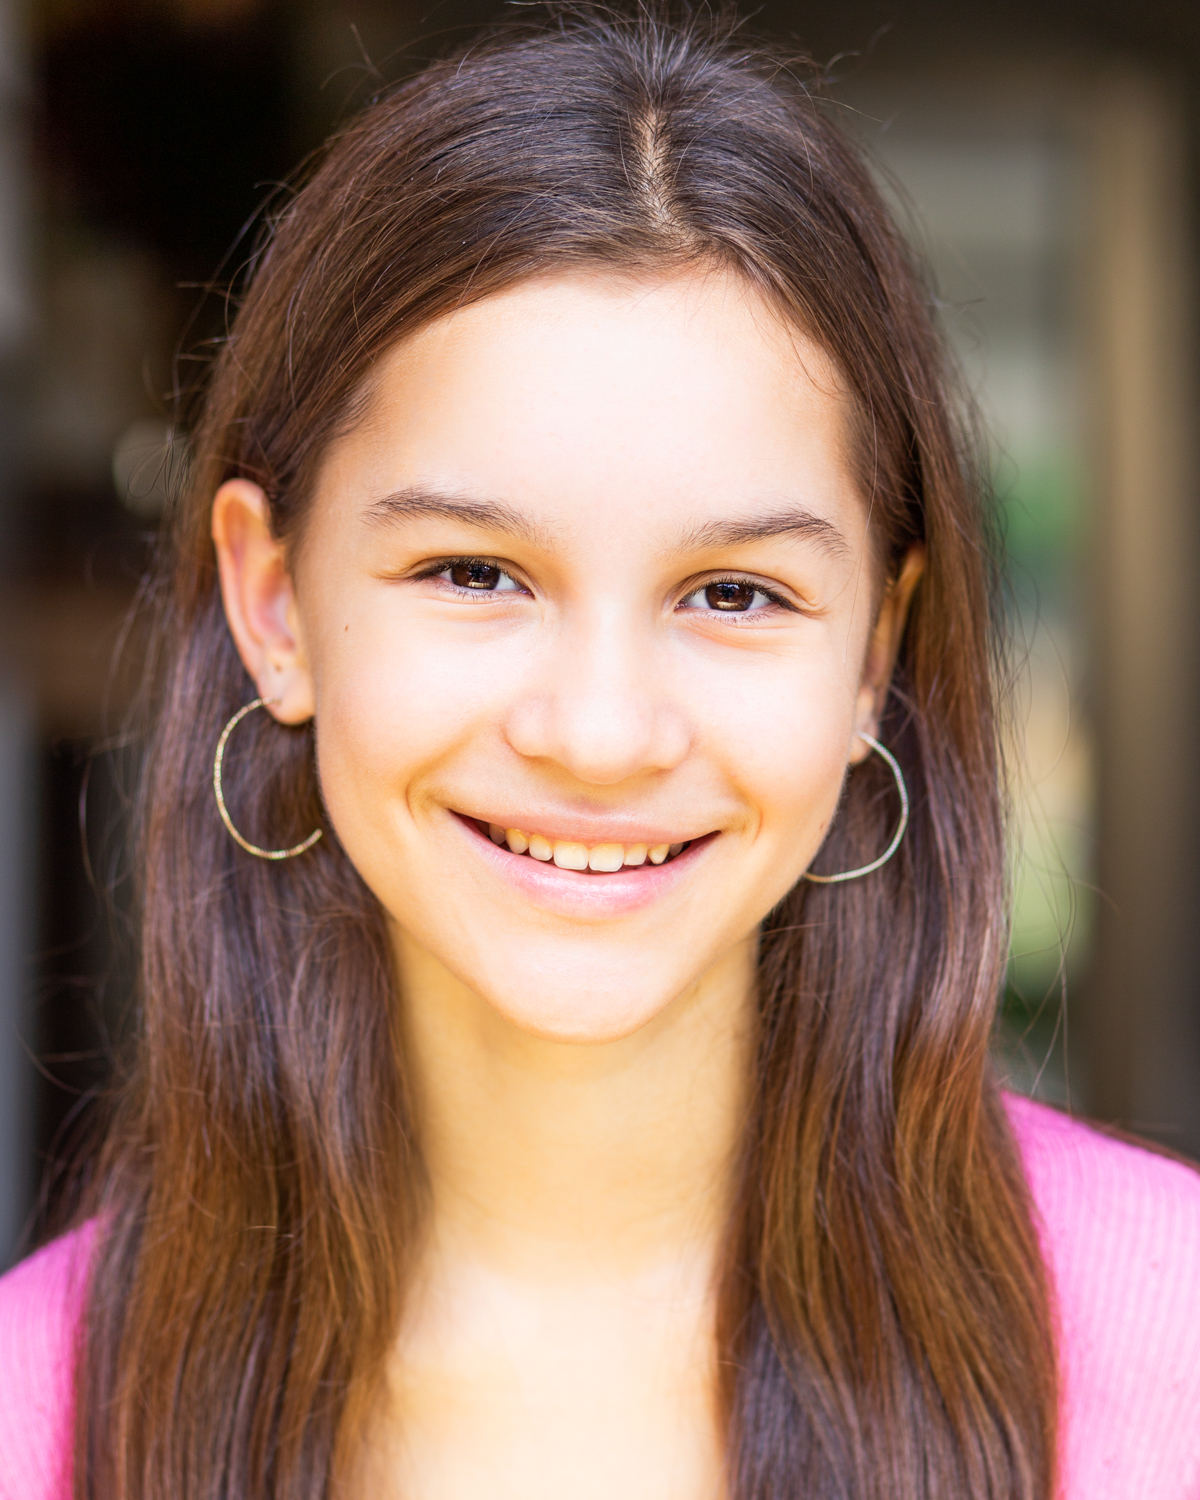 Teenage girl smiling at the camera wearing a pink top and big hoop earrings